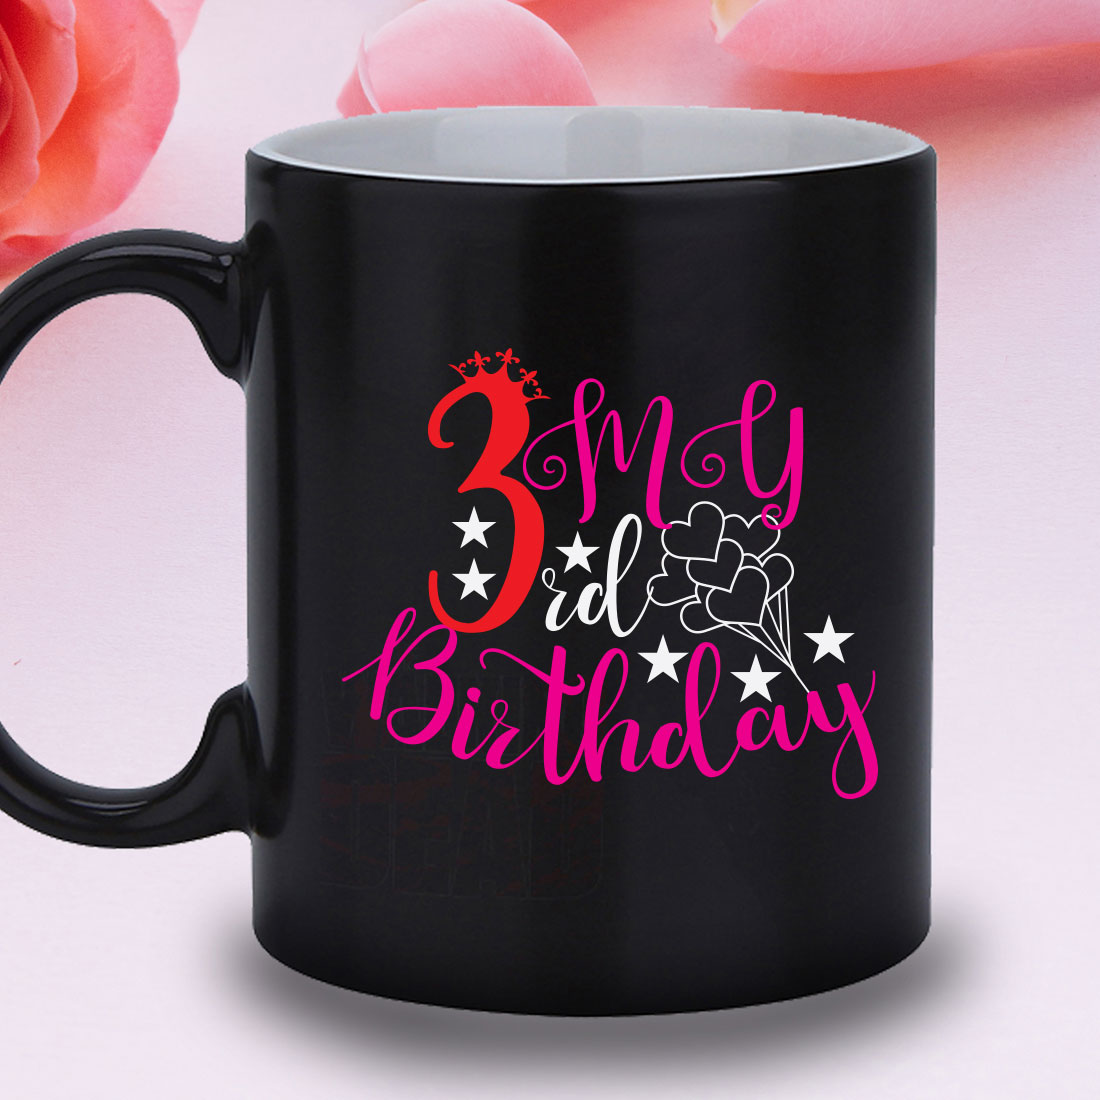 Black coffee mug with the words 3 my 3rd birthday on it.